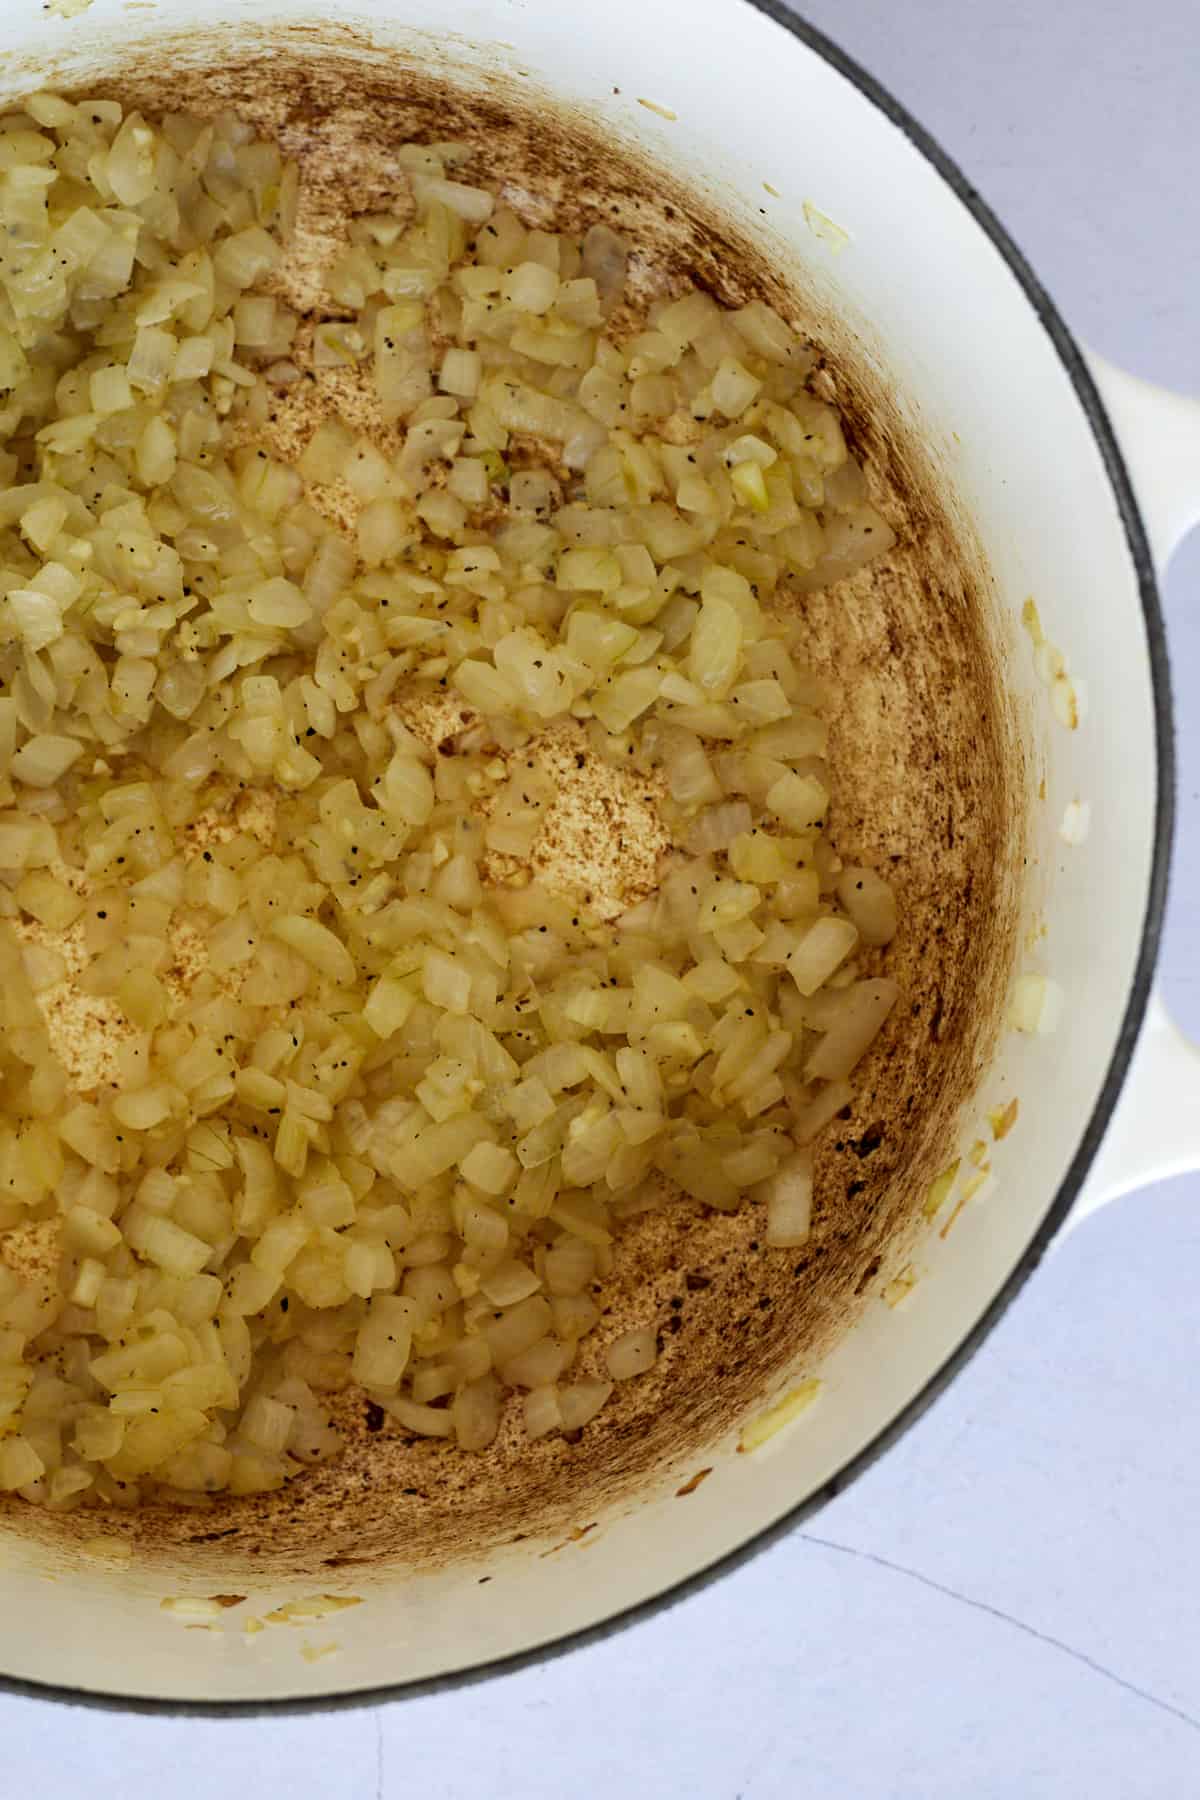 Sautéed onions in a large pot